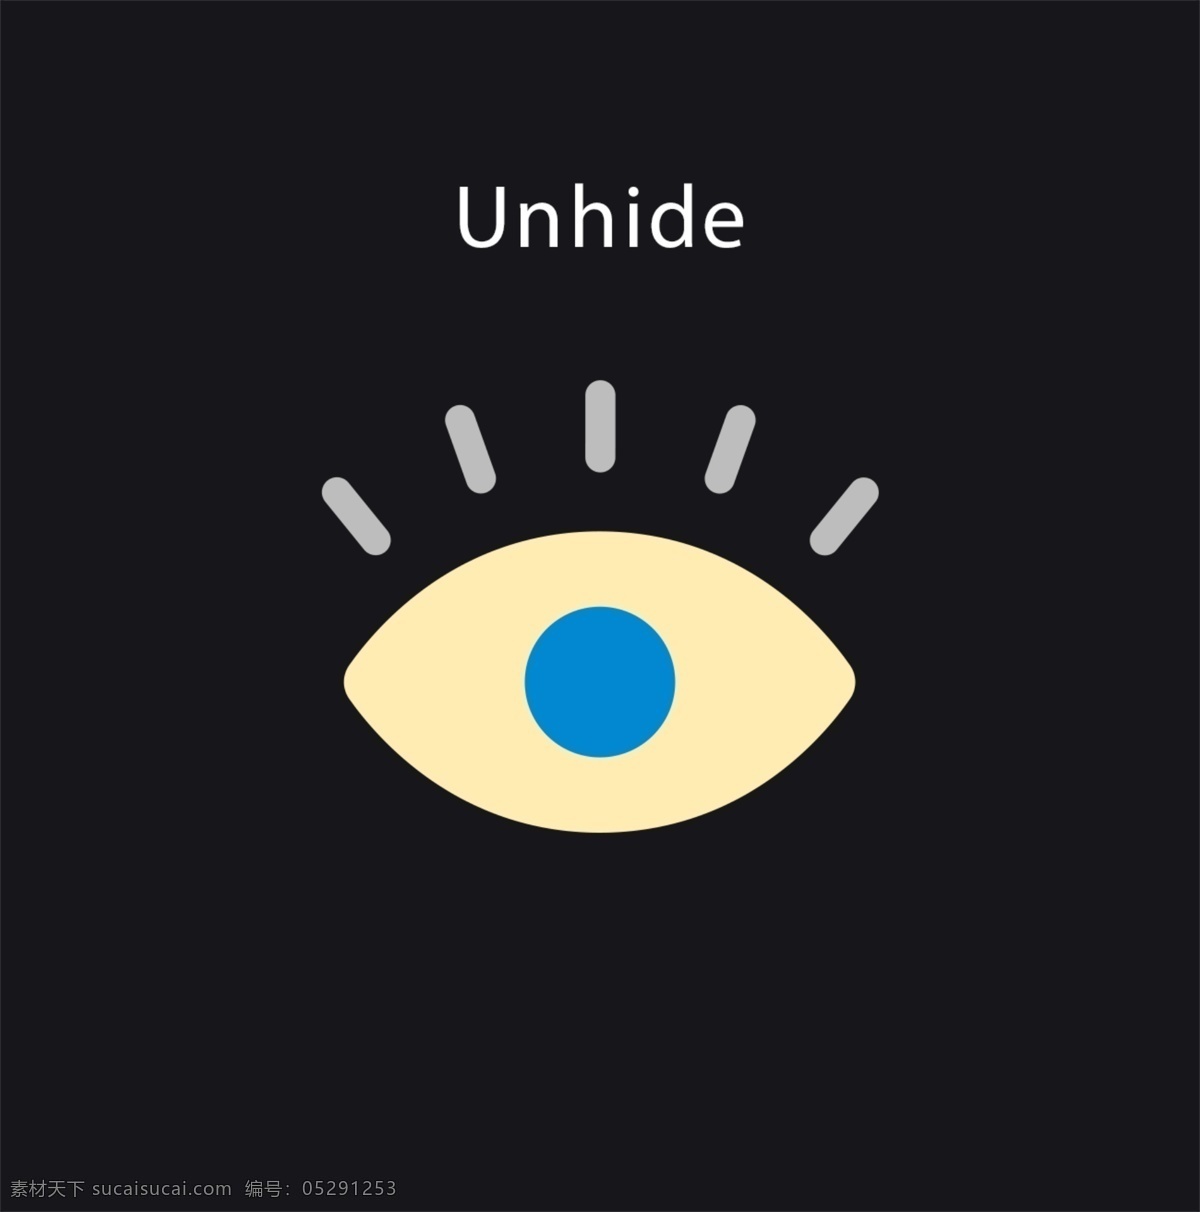 eye 眼睛 扁平化 icon unhide 隐藏可见 密码可见 简约